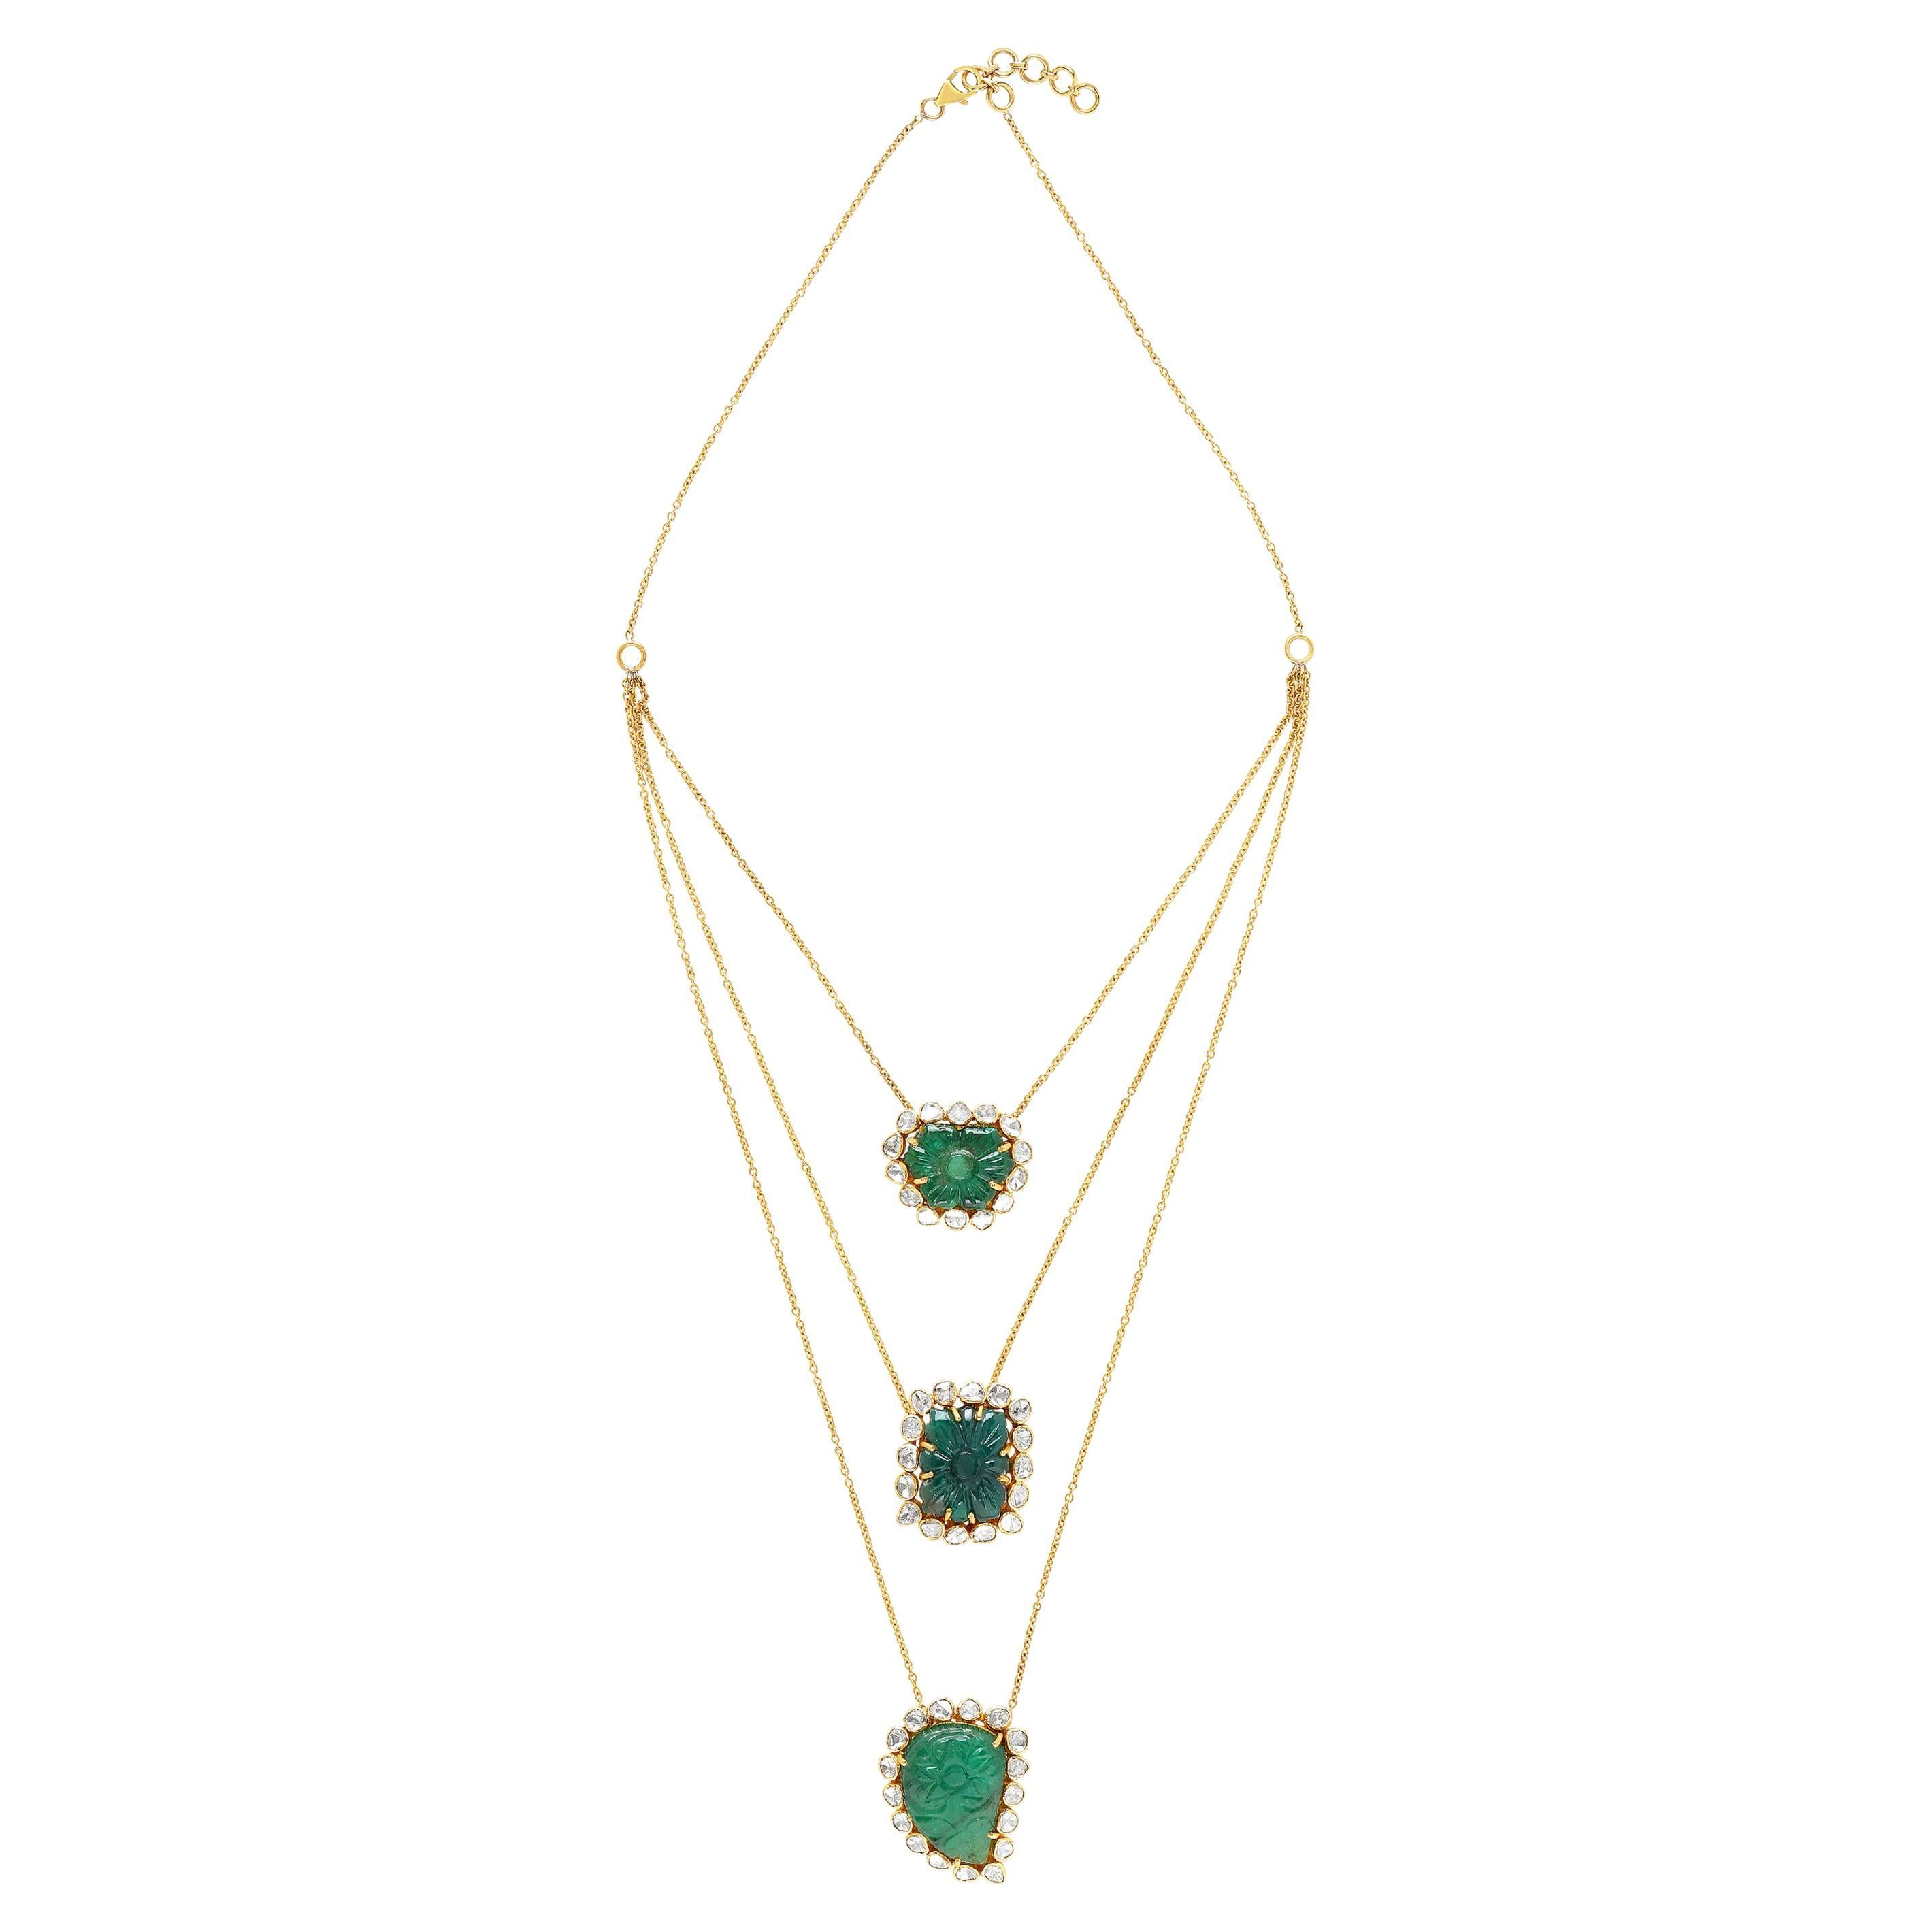 14 Karat Yellow Gold Layered Necklace with Uncut Diamonds and Emeralds